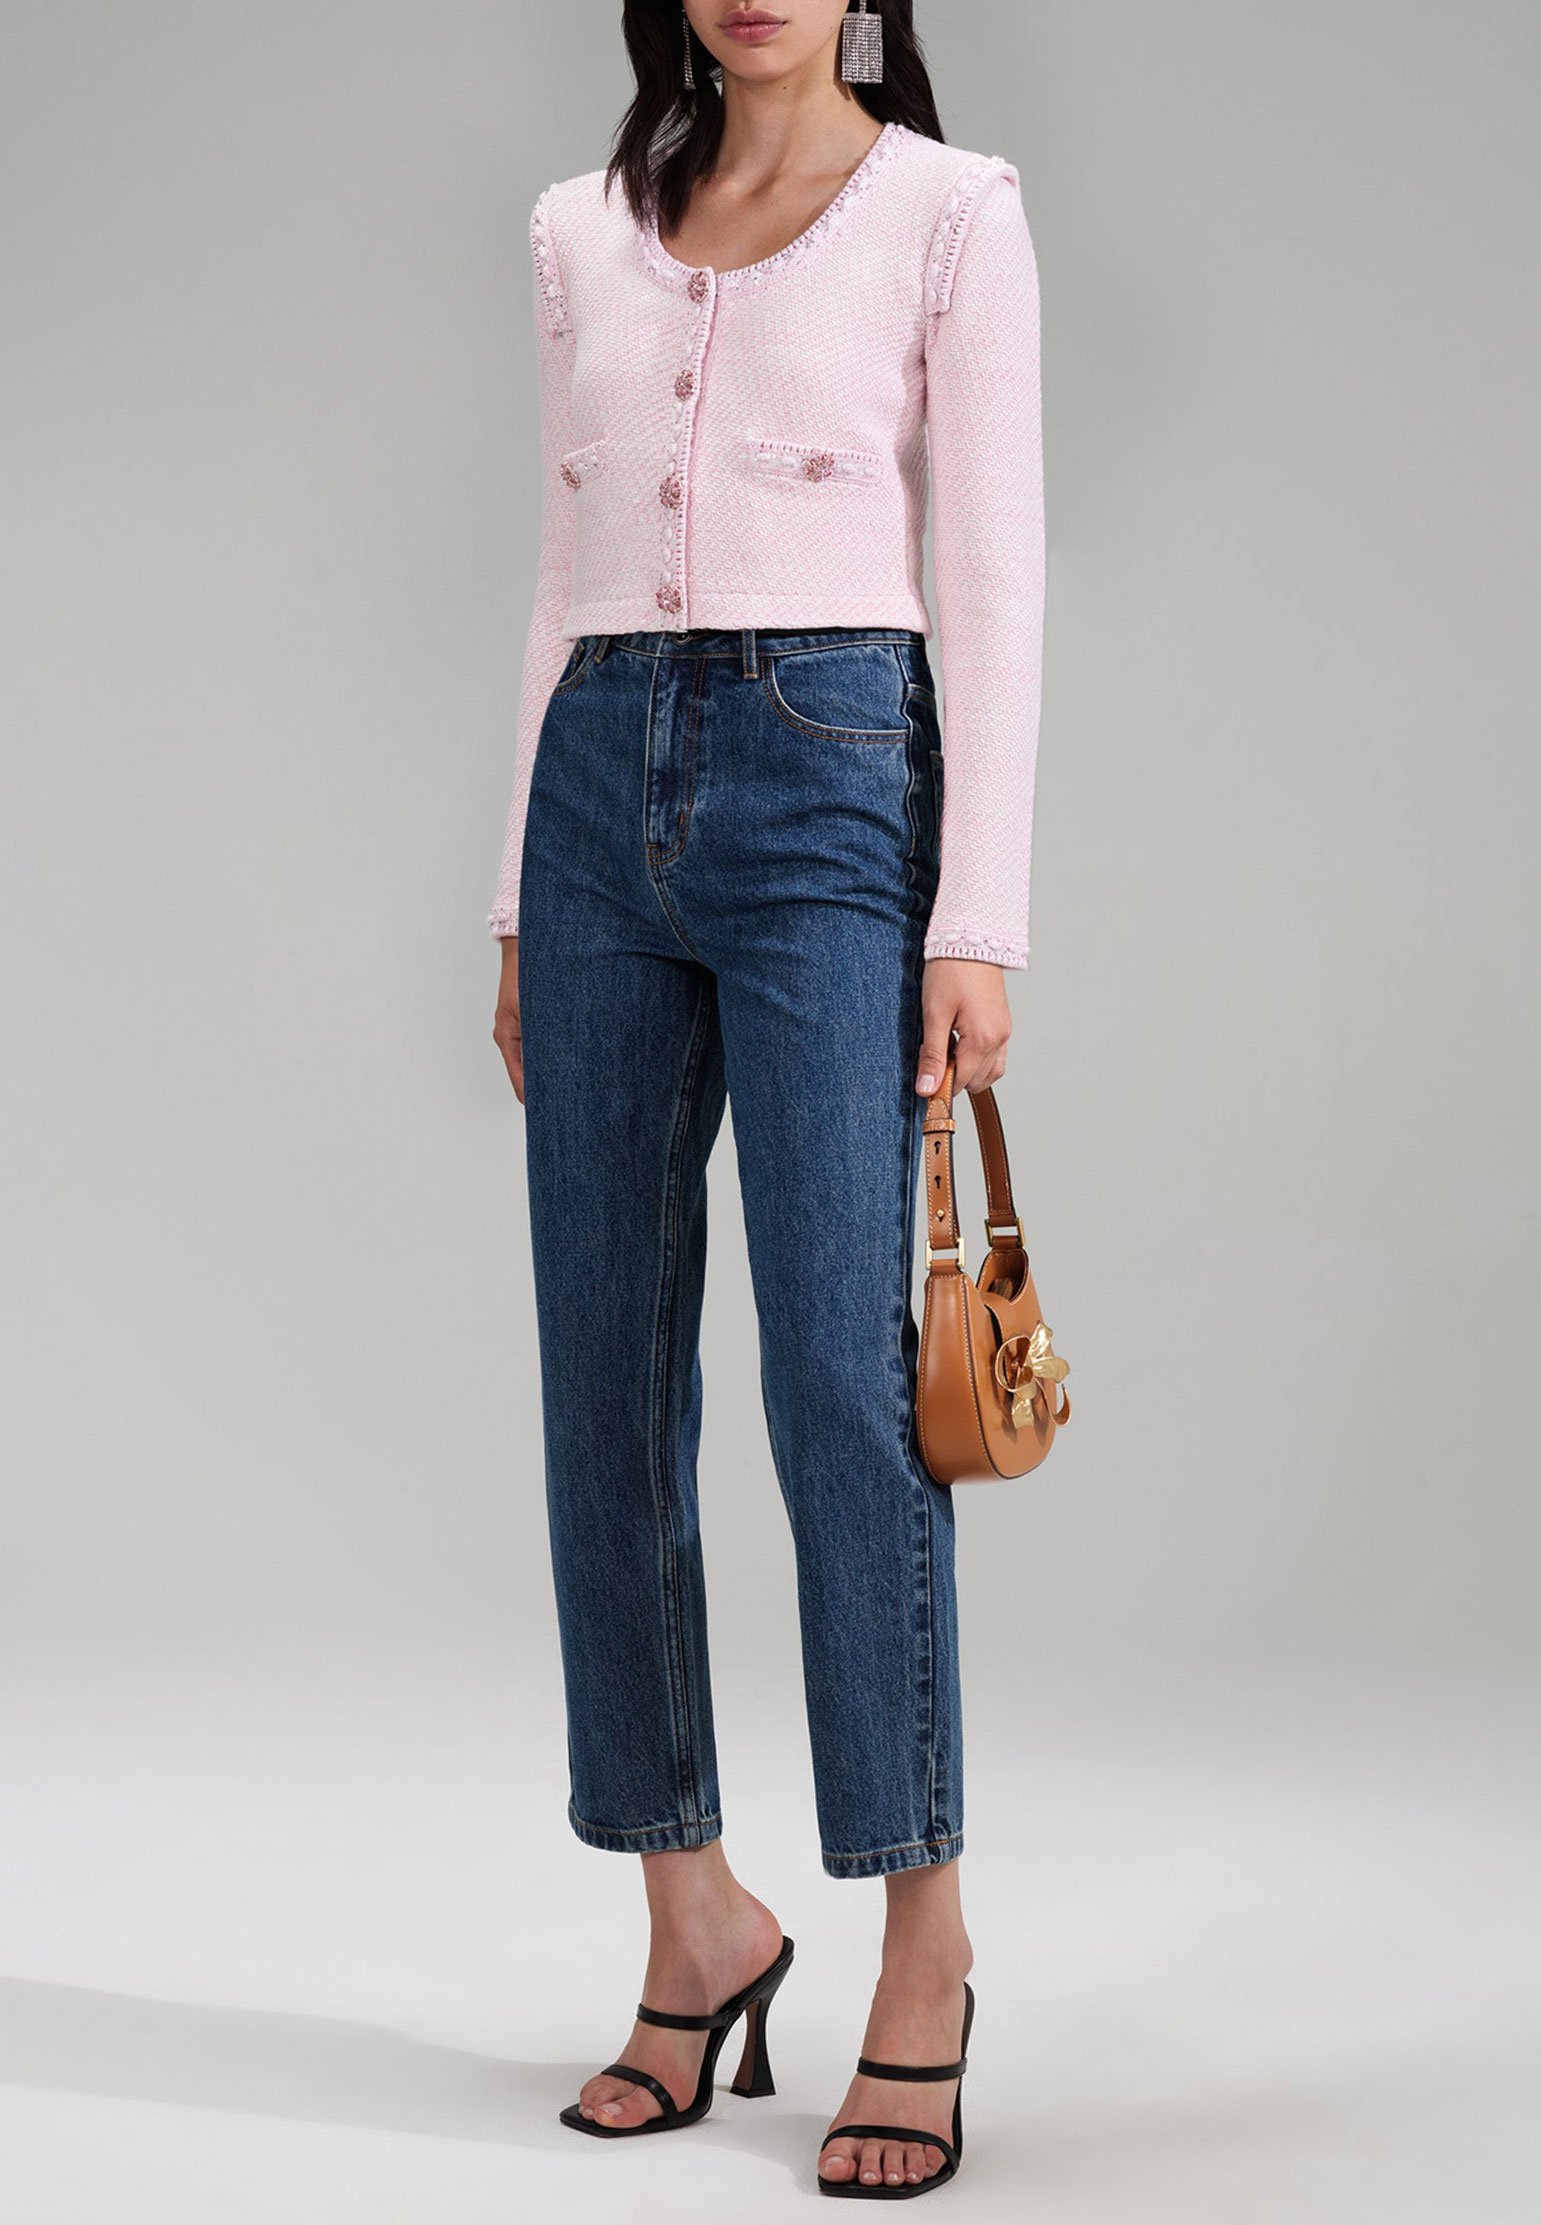 Cardigan SELF-PORTRAIT Color: pink (Code: 2246) in online store Allure